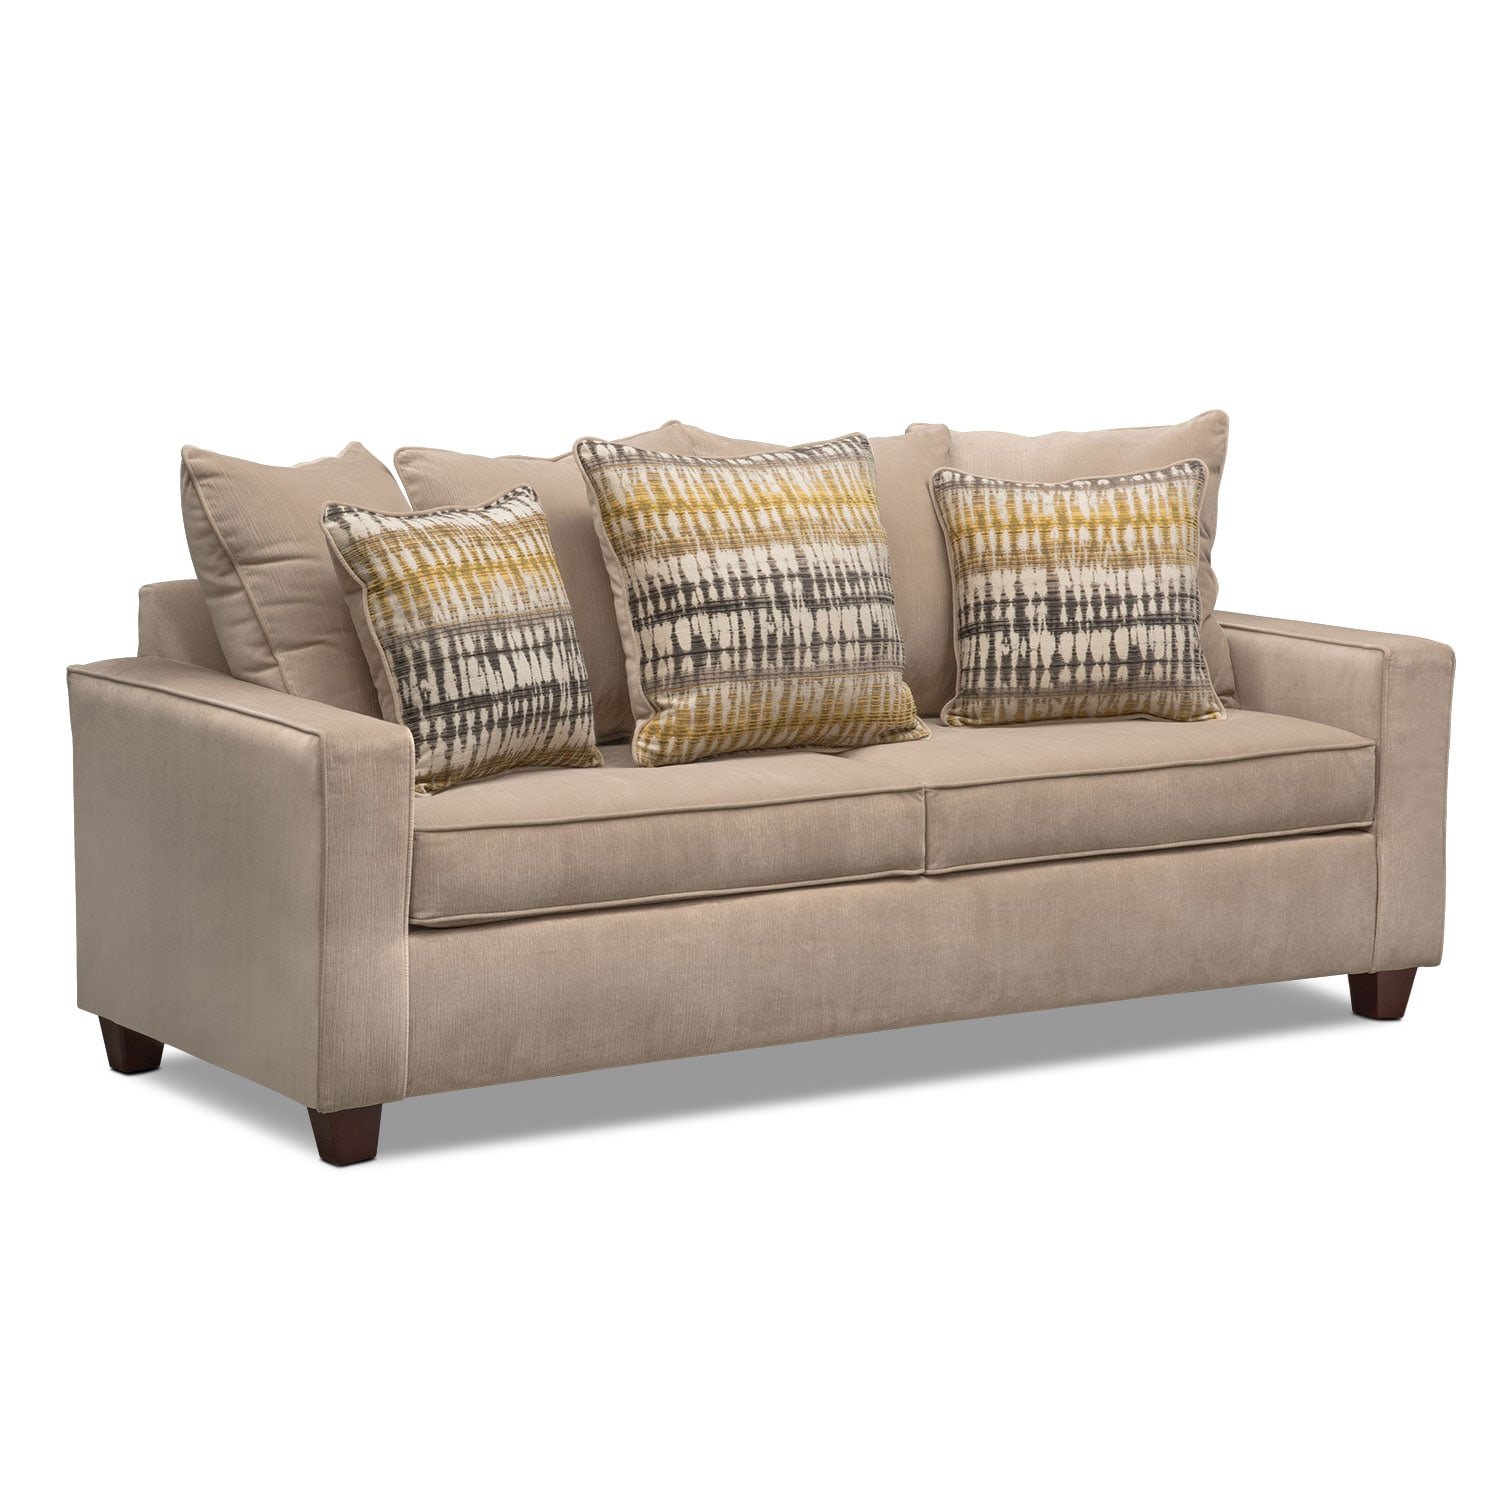 Bryden Sofa - Beige | Value City Furniture